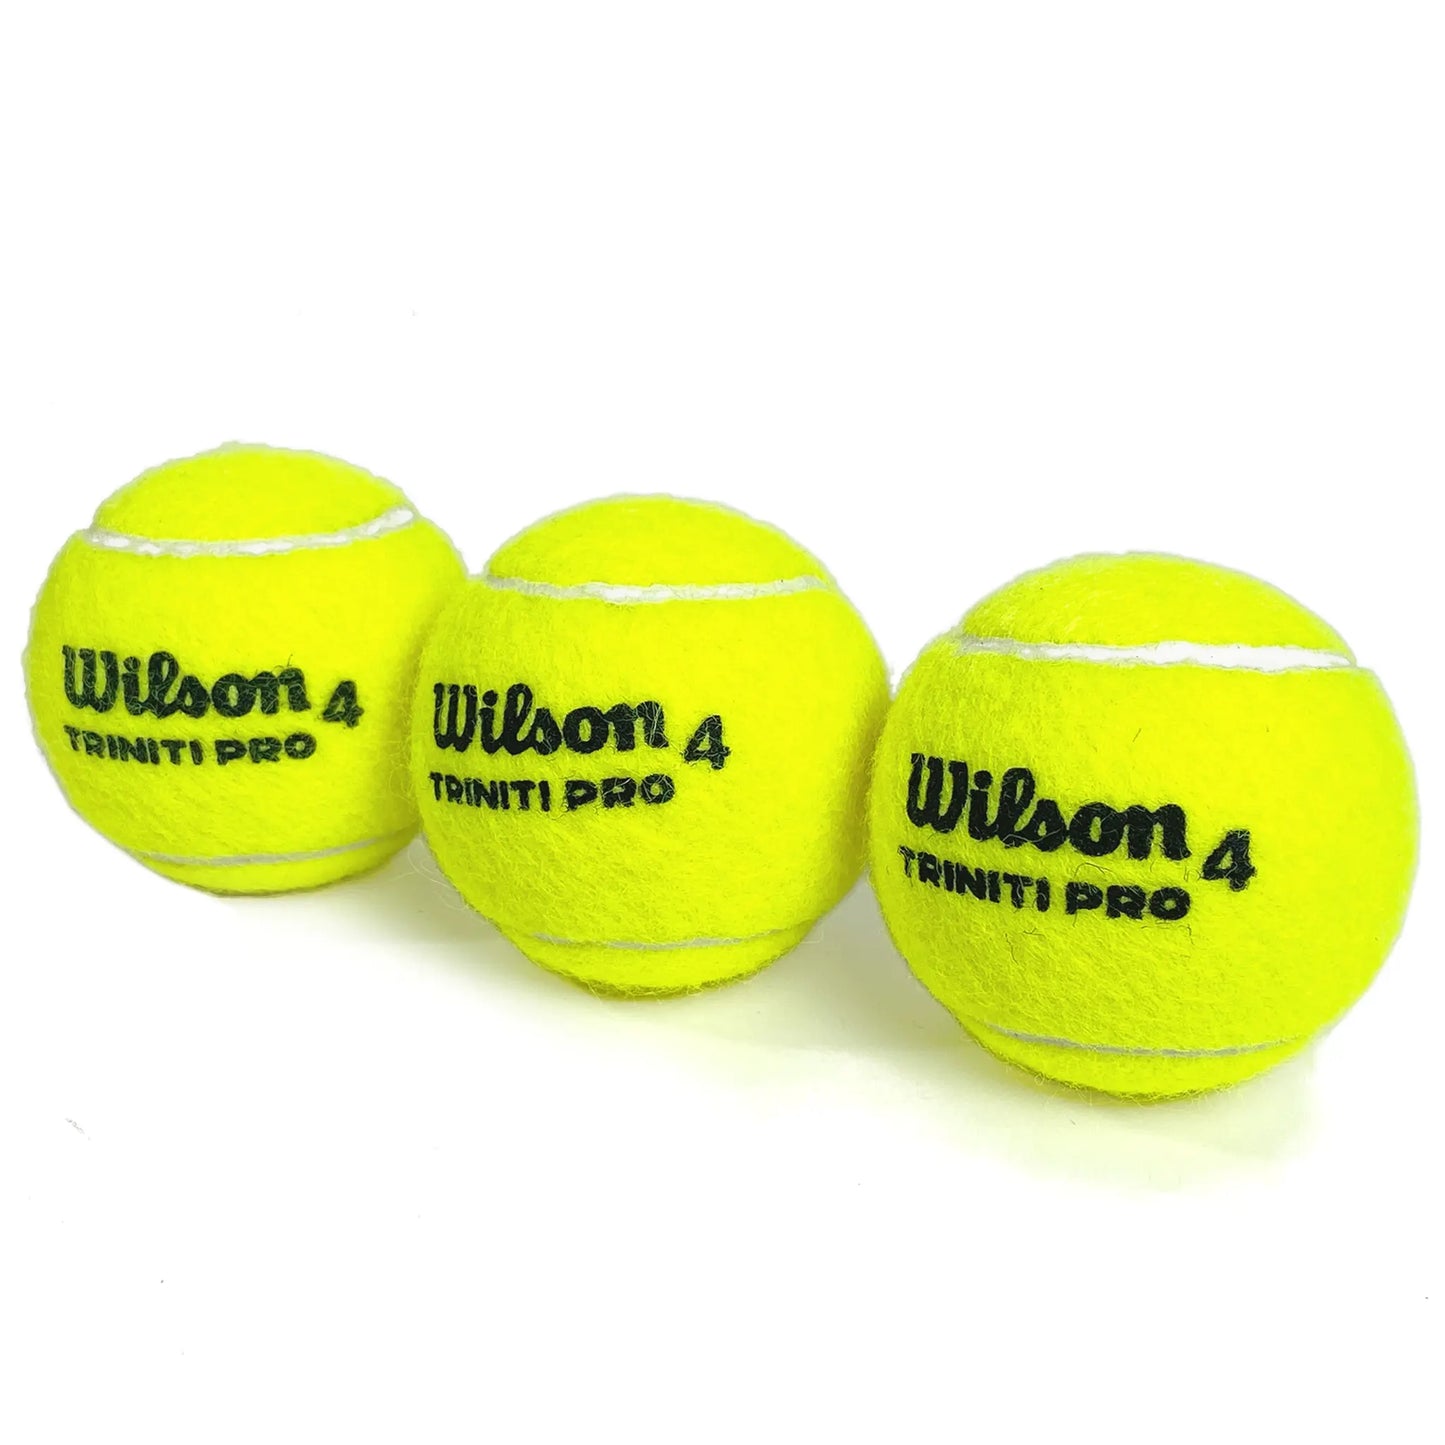 Wilson balls Triniti Pro (tube of 3)